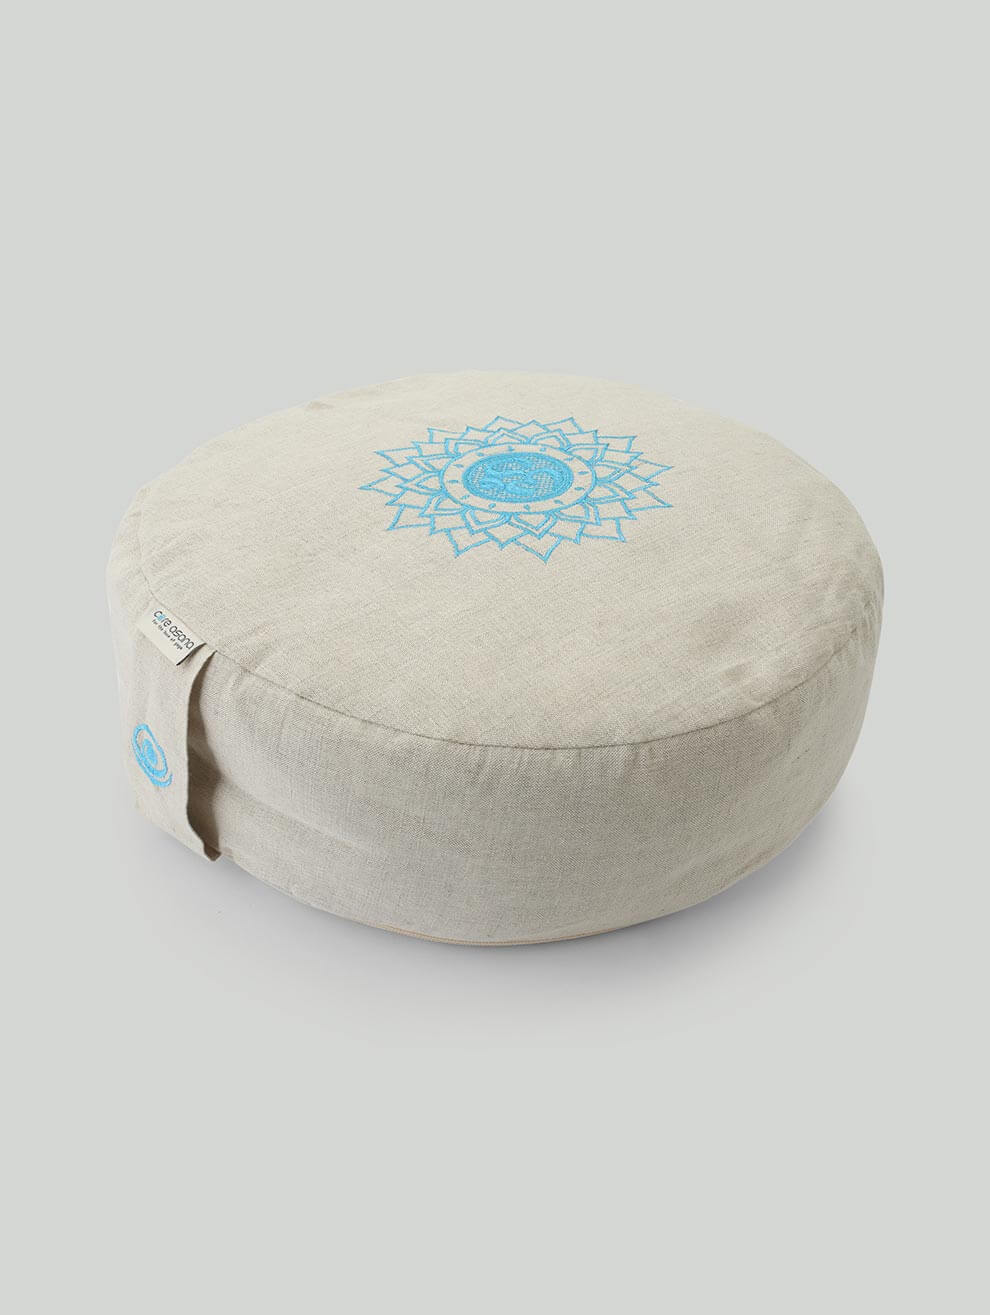 Shop OM Embroidered Mod Meditation Cushion